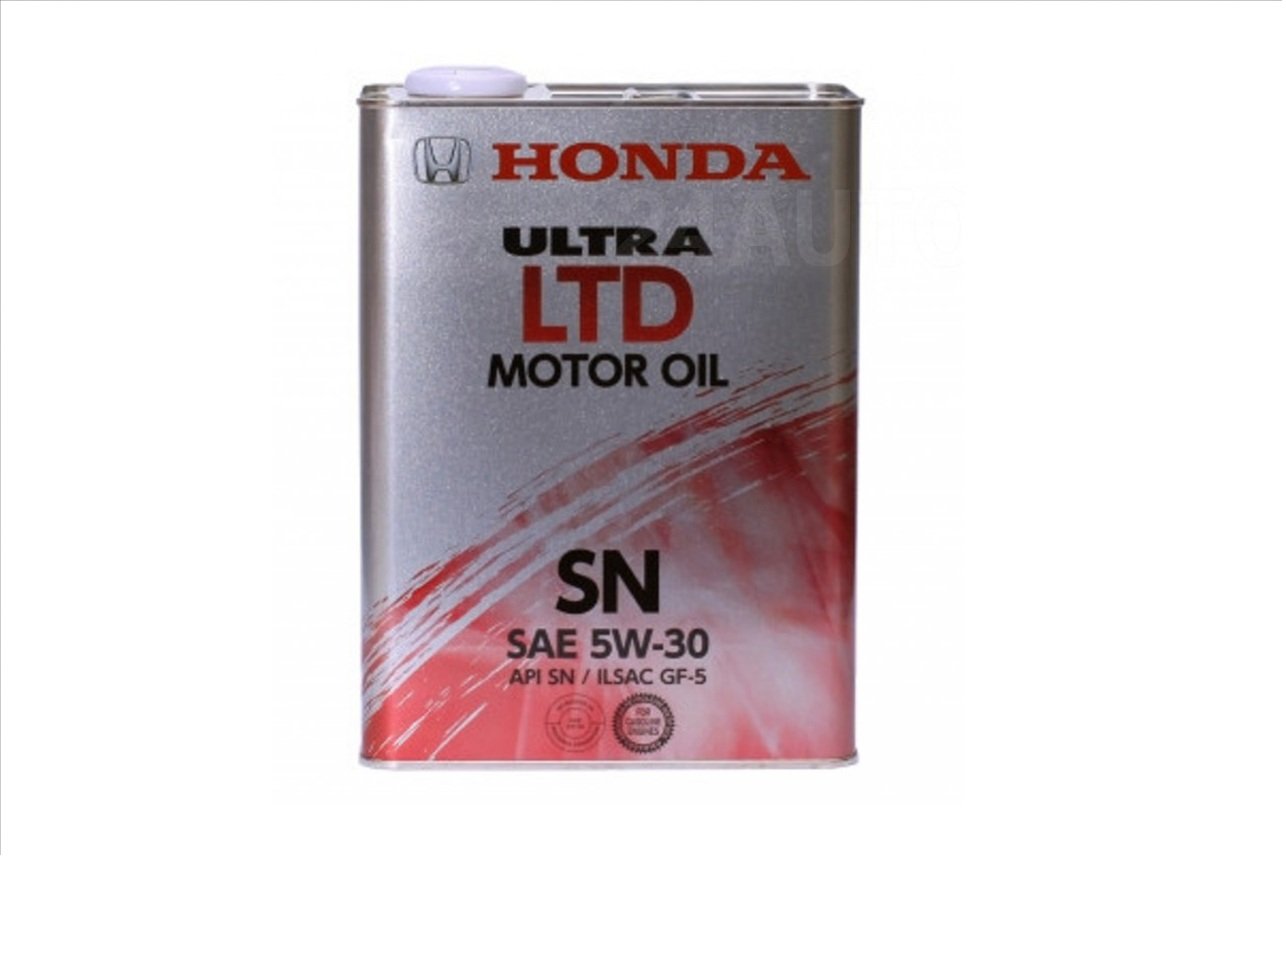 Моторные масла honda купить. Honda Ultra Ltd 5w30 SN. 4л. Honda SN 5w30. Honda Ultra Ltd 5w30 SN 4л. Honda 5w30 4л артикул.